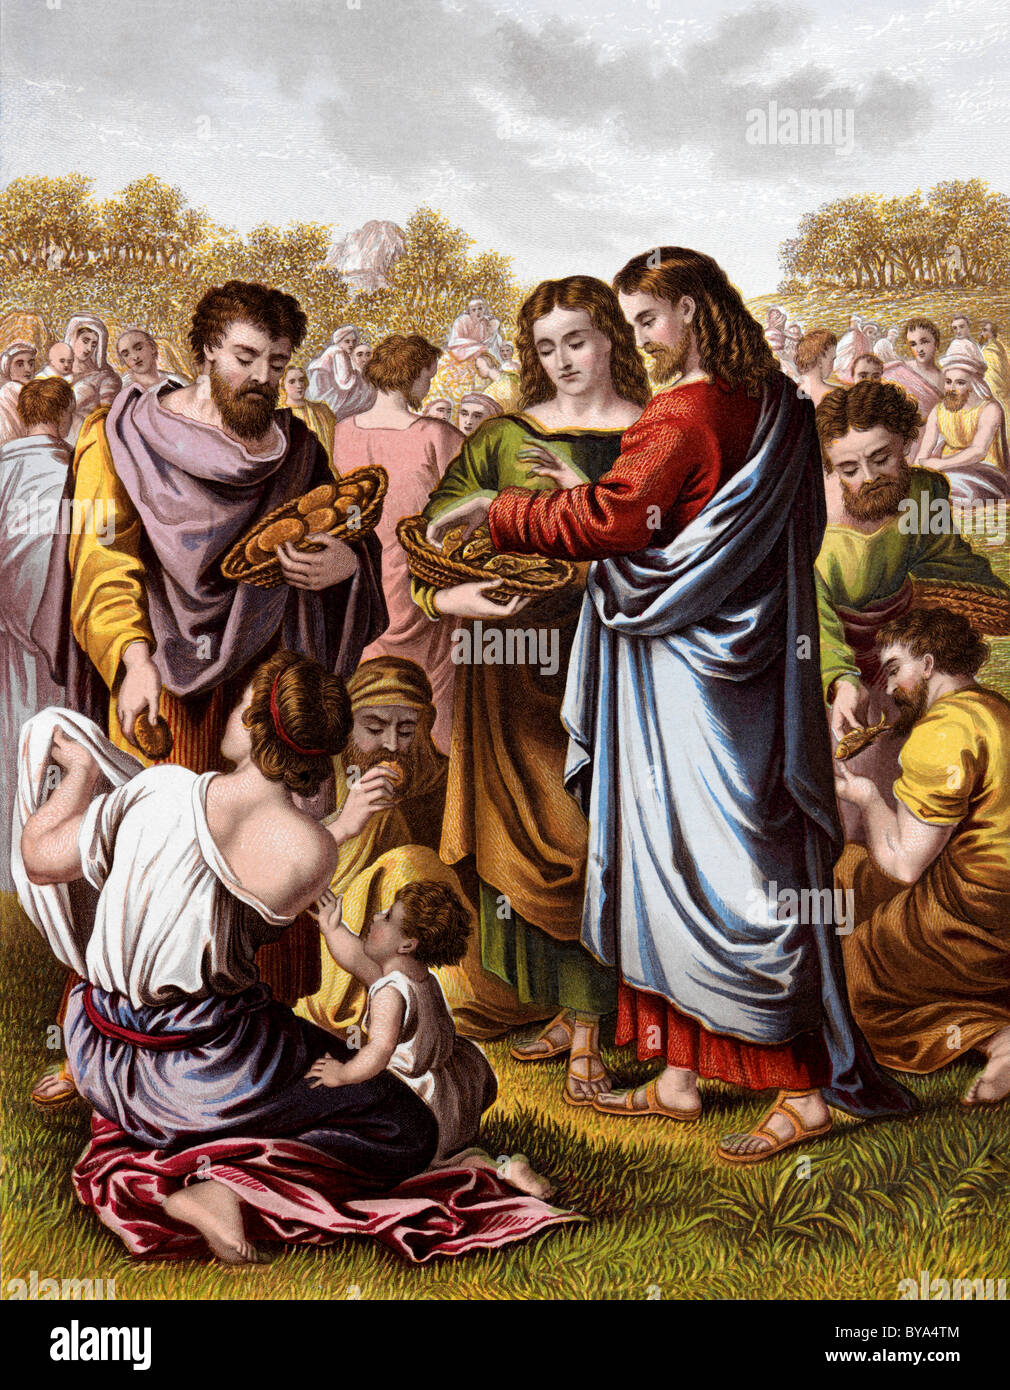 Bible Stories Illustration Of Christ Feeding The Multitude Stock Photo